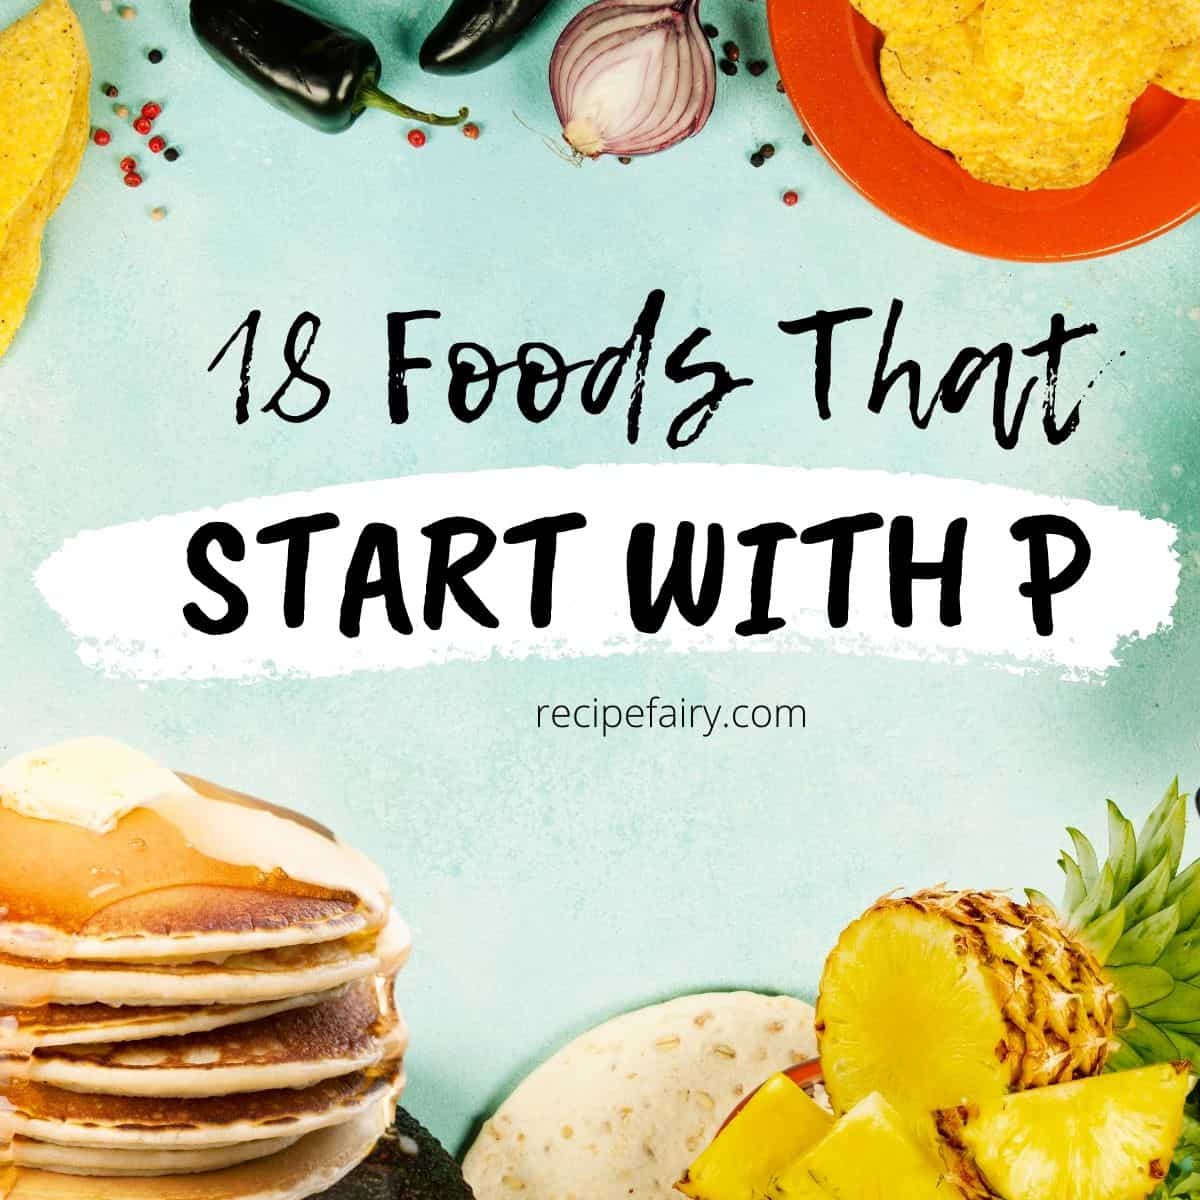 https://recipefairy.com/wp-content/uploads/2020/09/foods-that-start-with-p.jpg